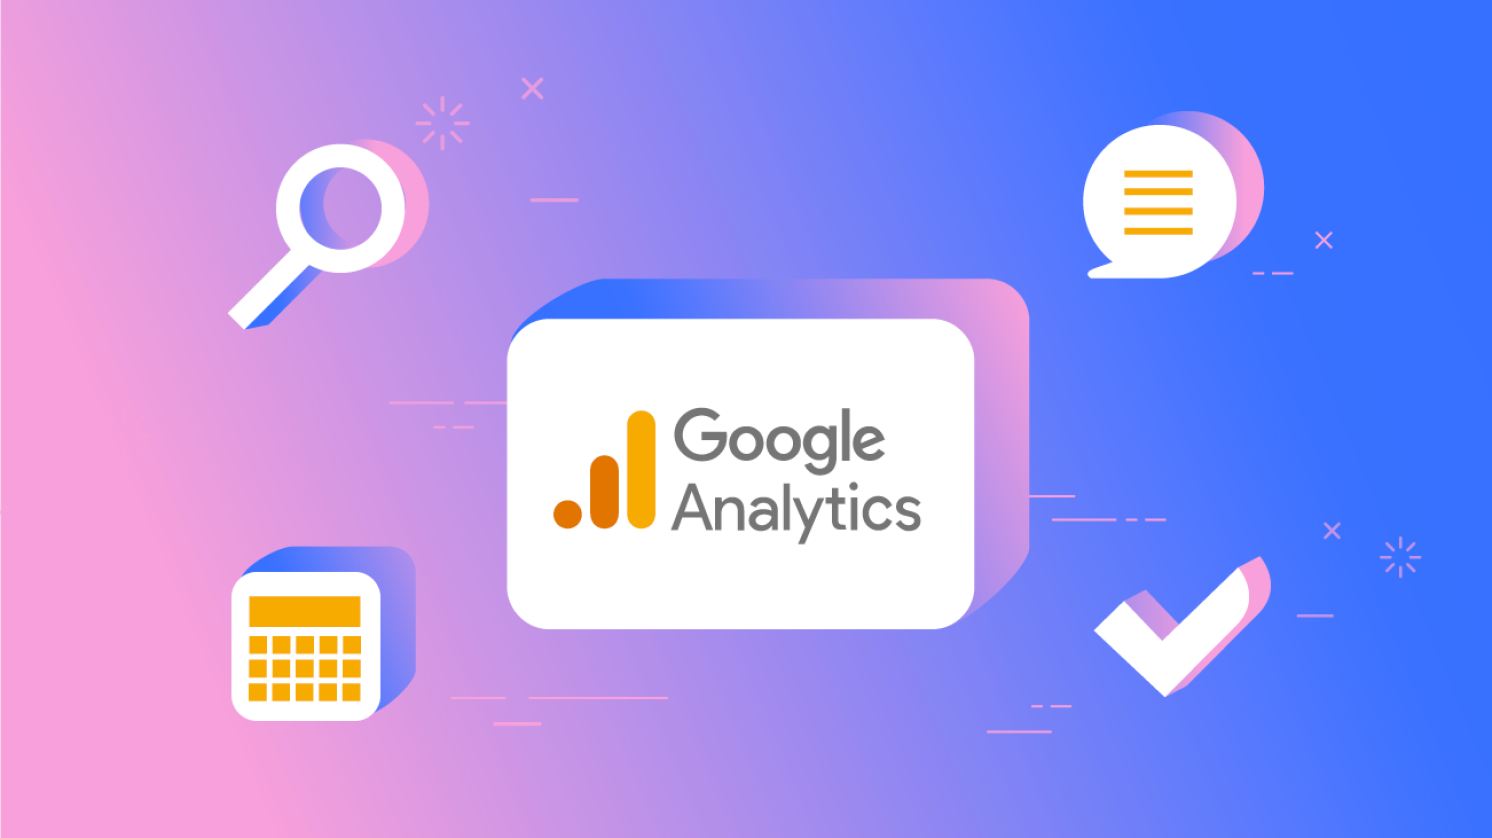 google analytics logo and tools